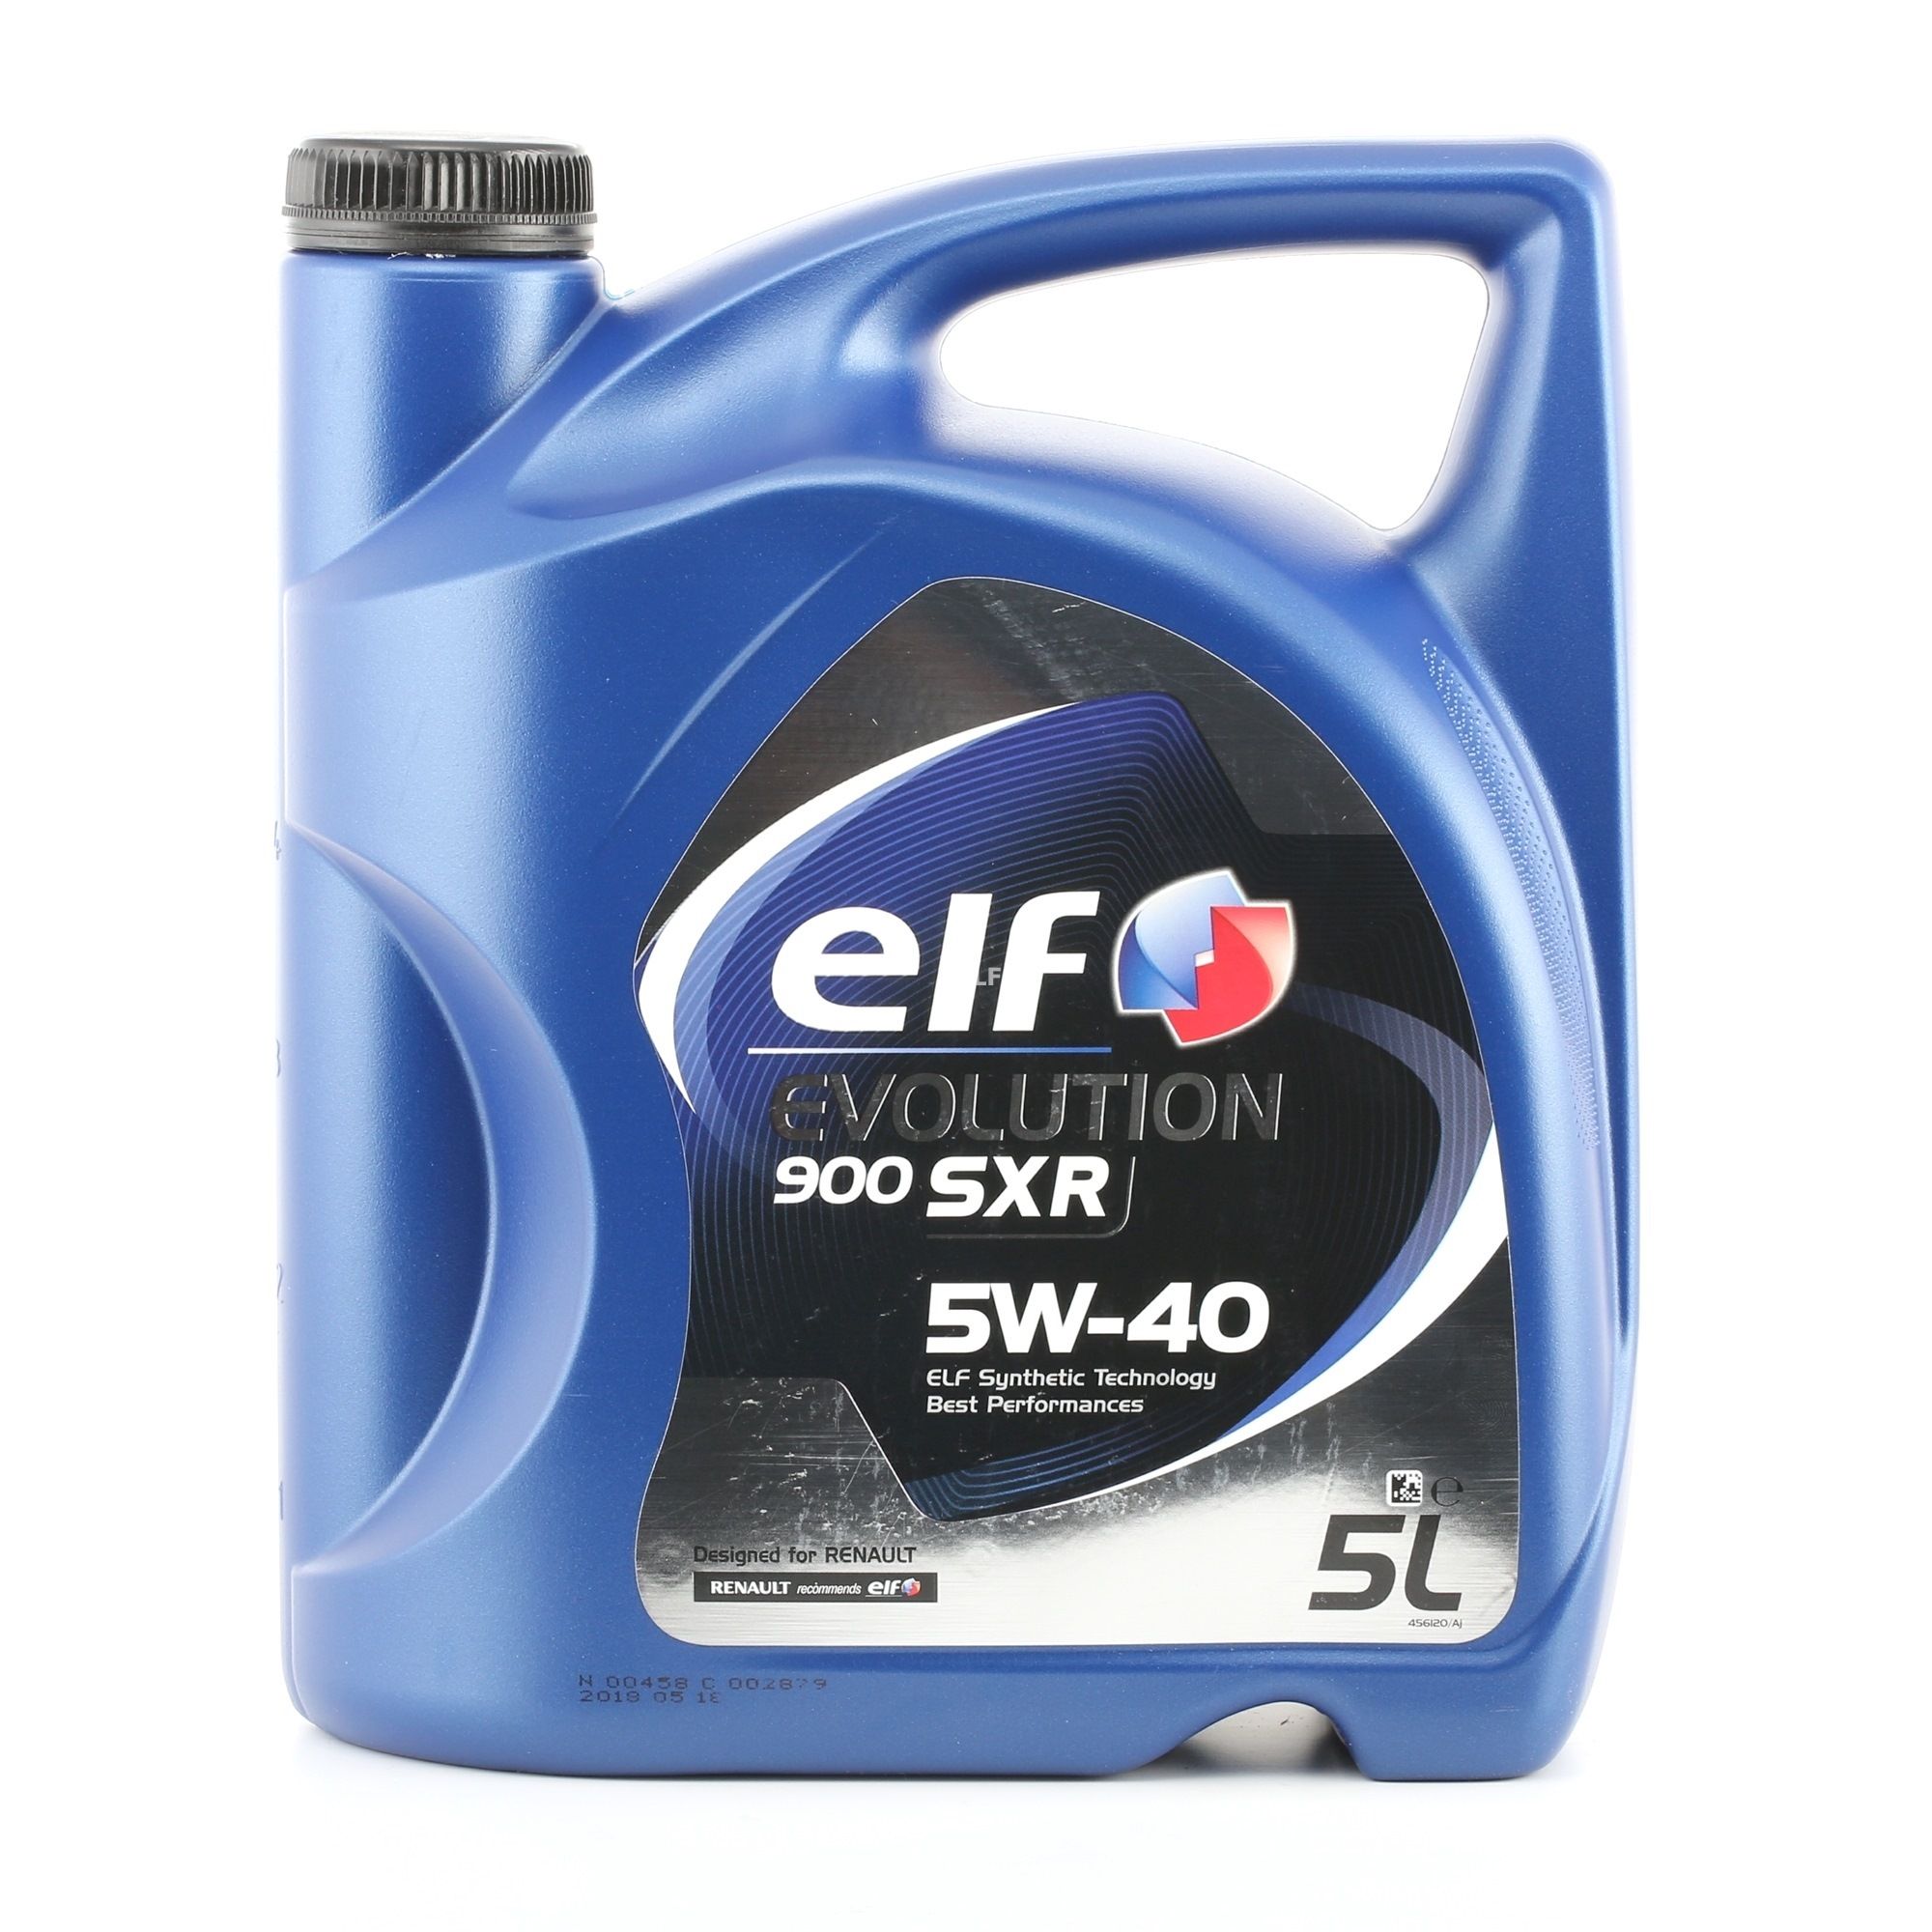 Buy Motor oil ELF petrol 2198388 Evolution, 900 SXR 5W-40, 5l